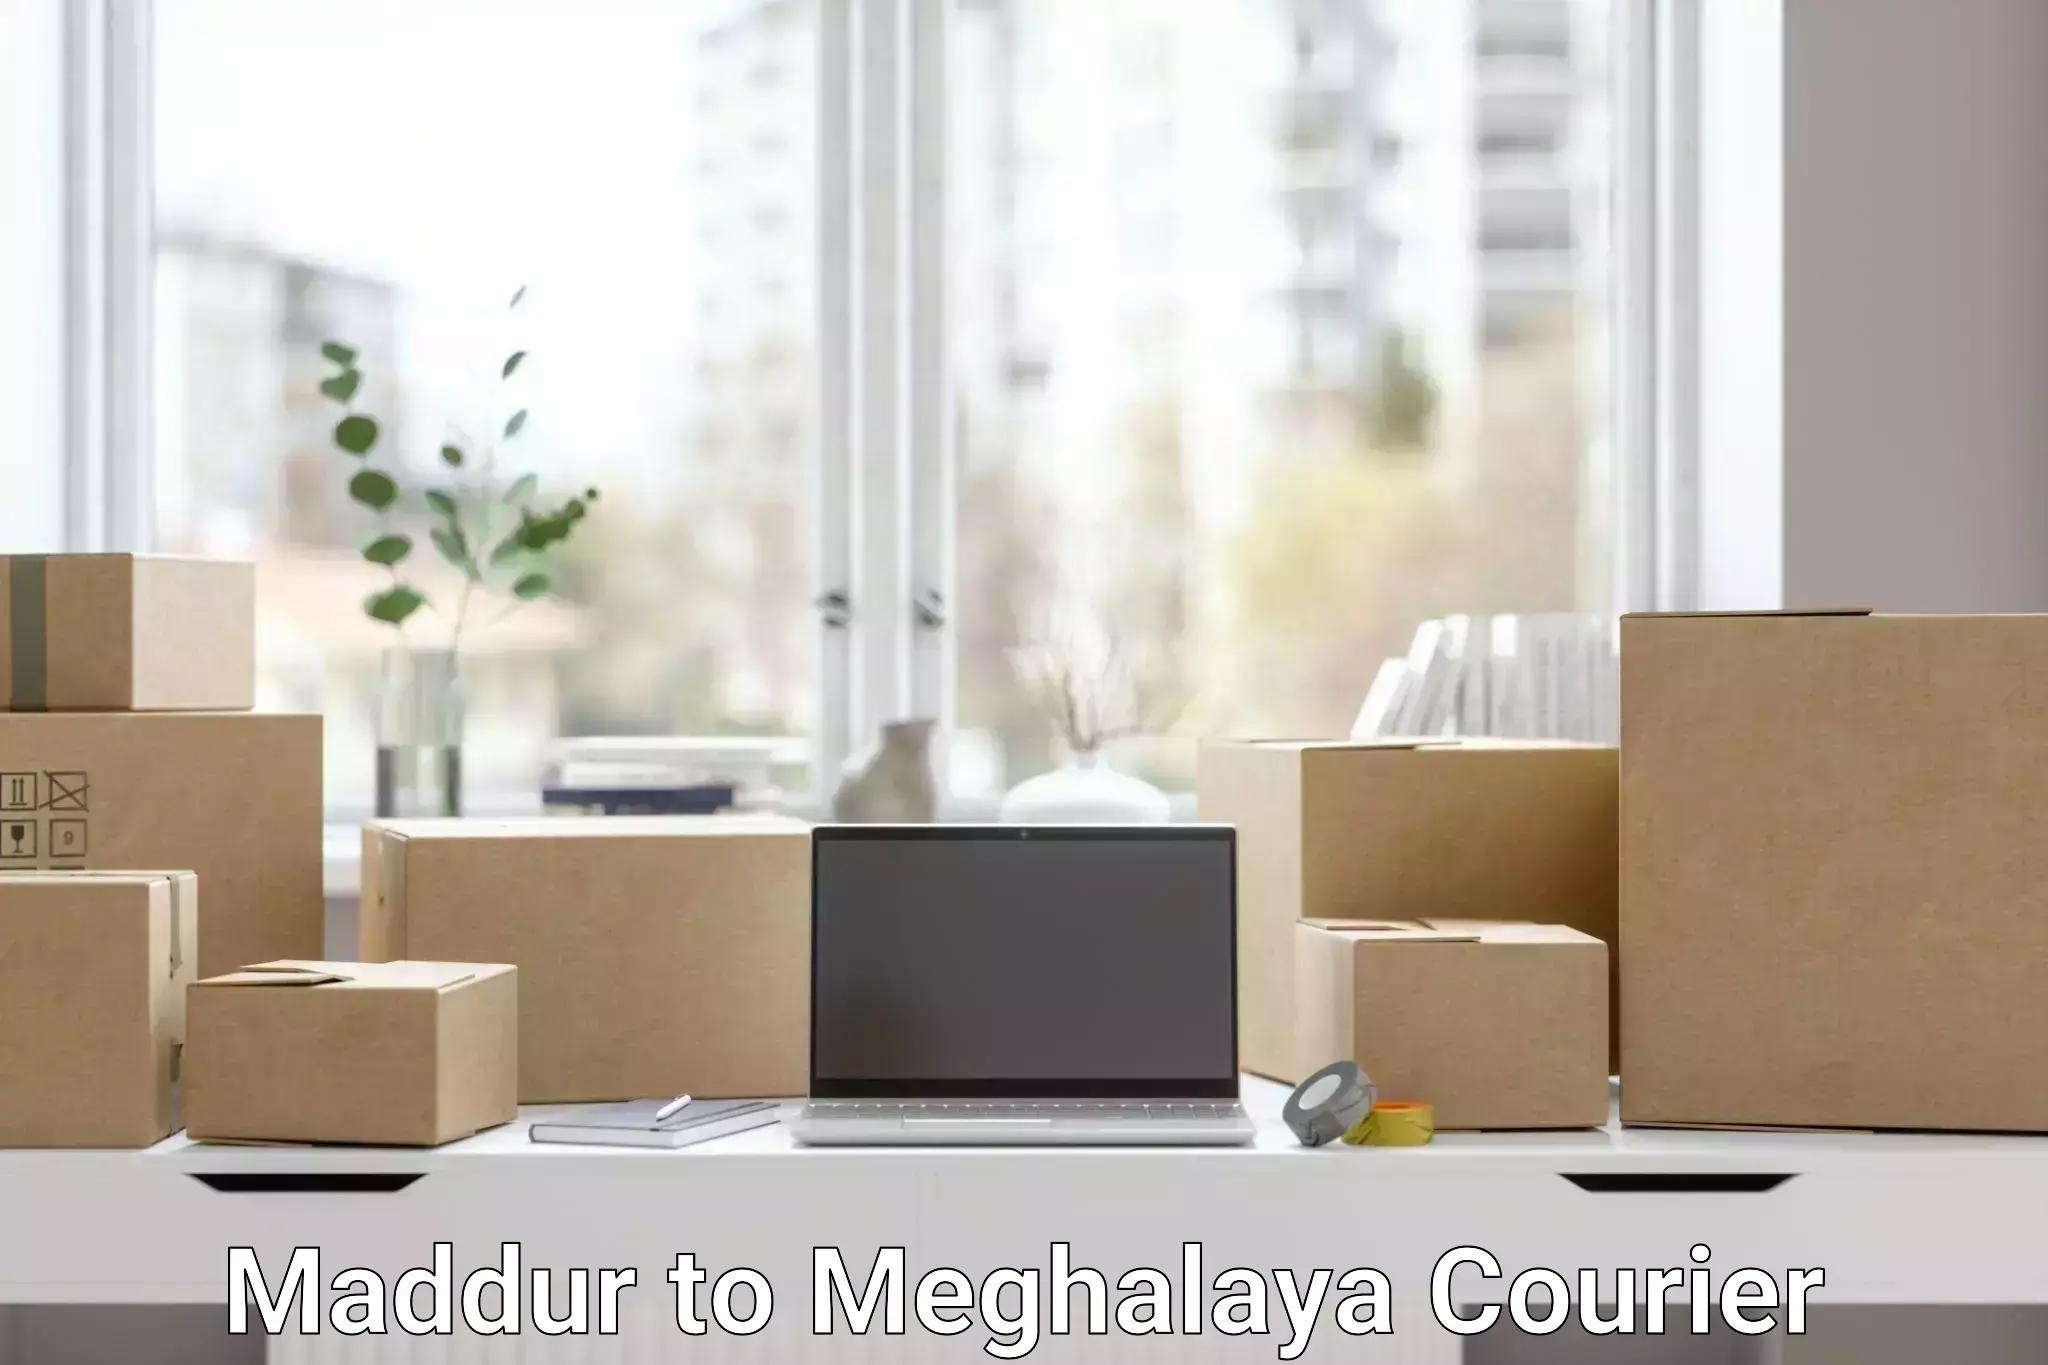 Courier service innovation Maddur to Meghalaya